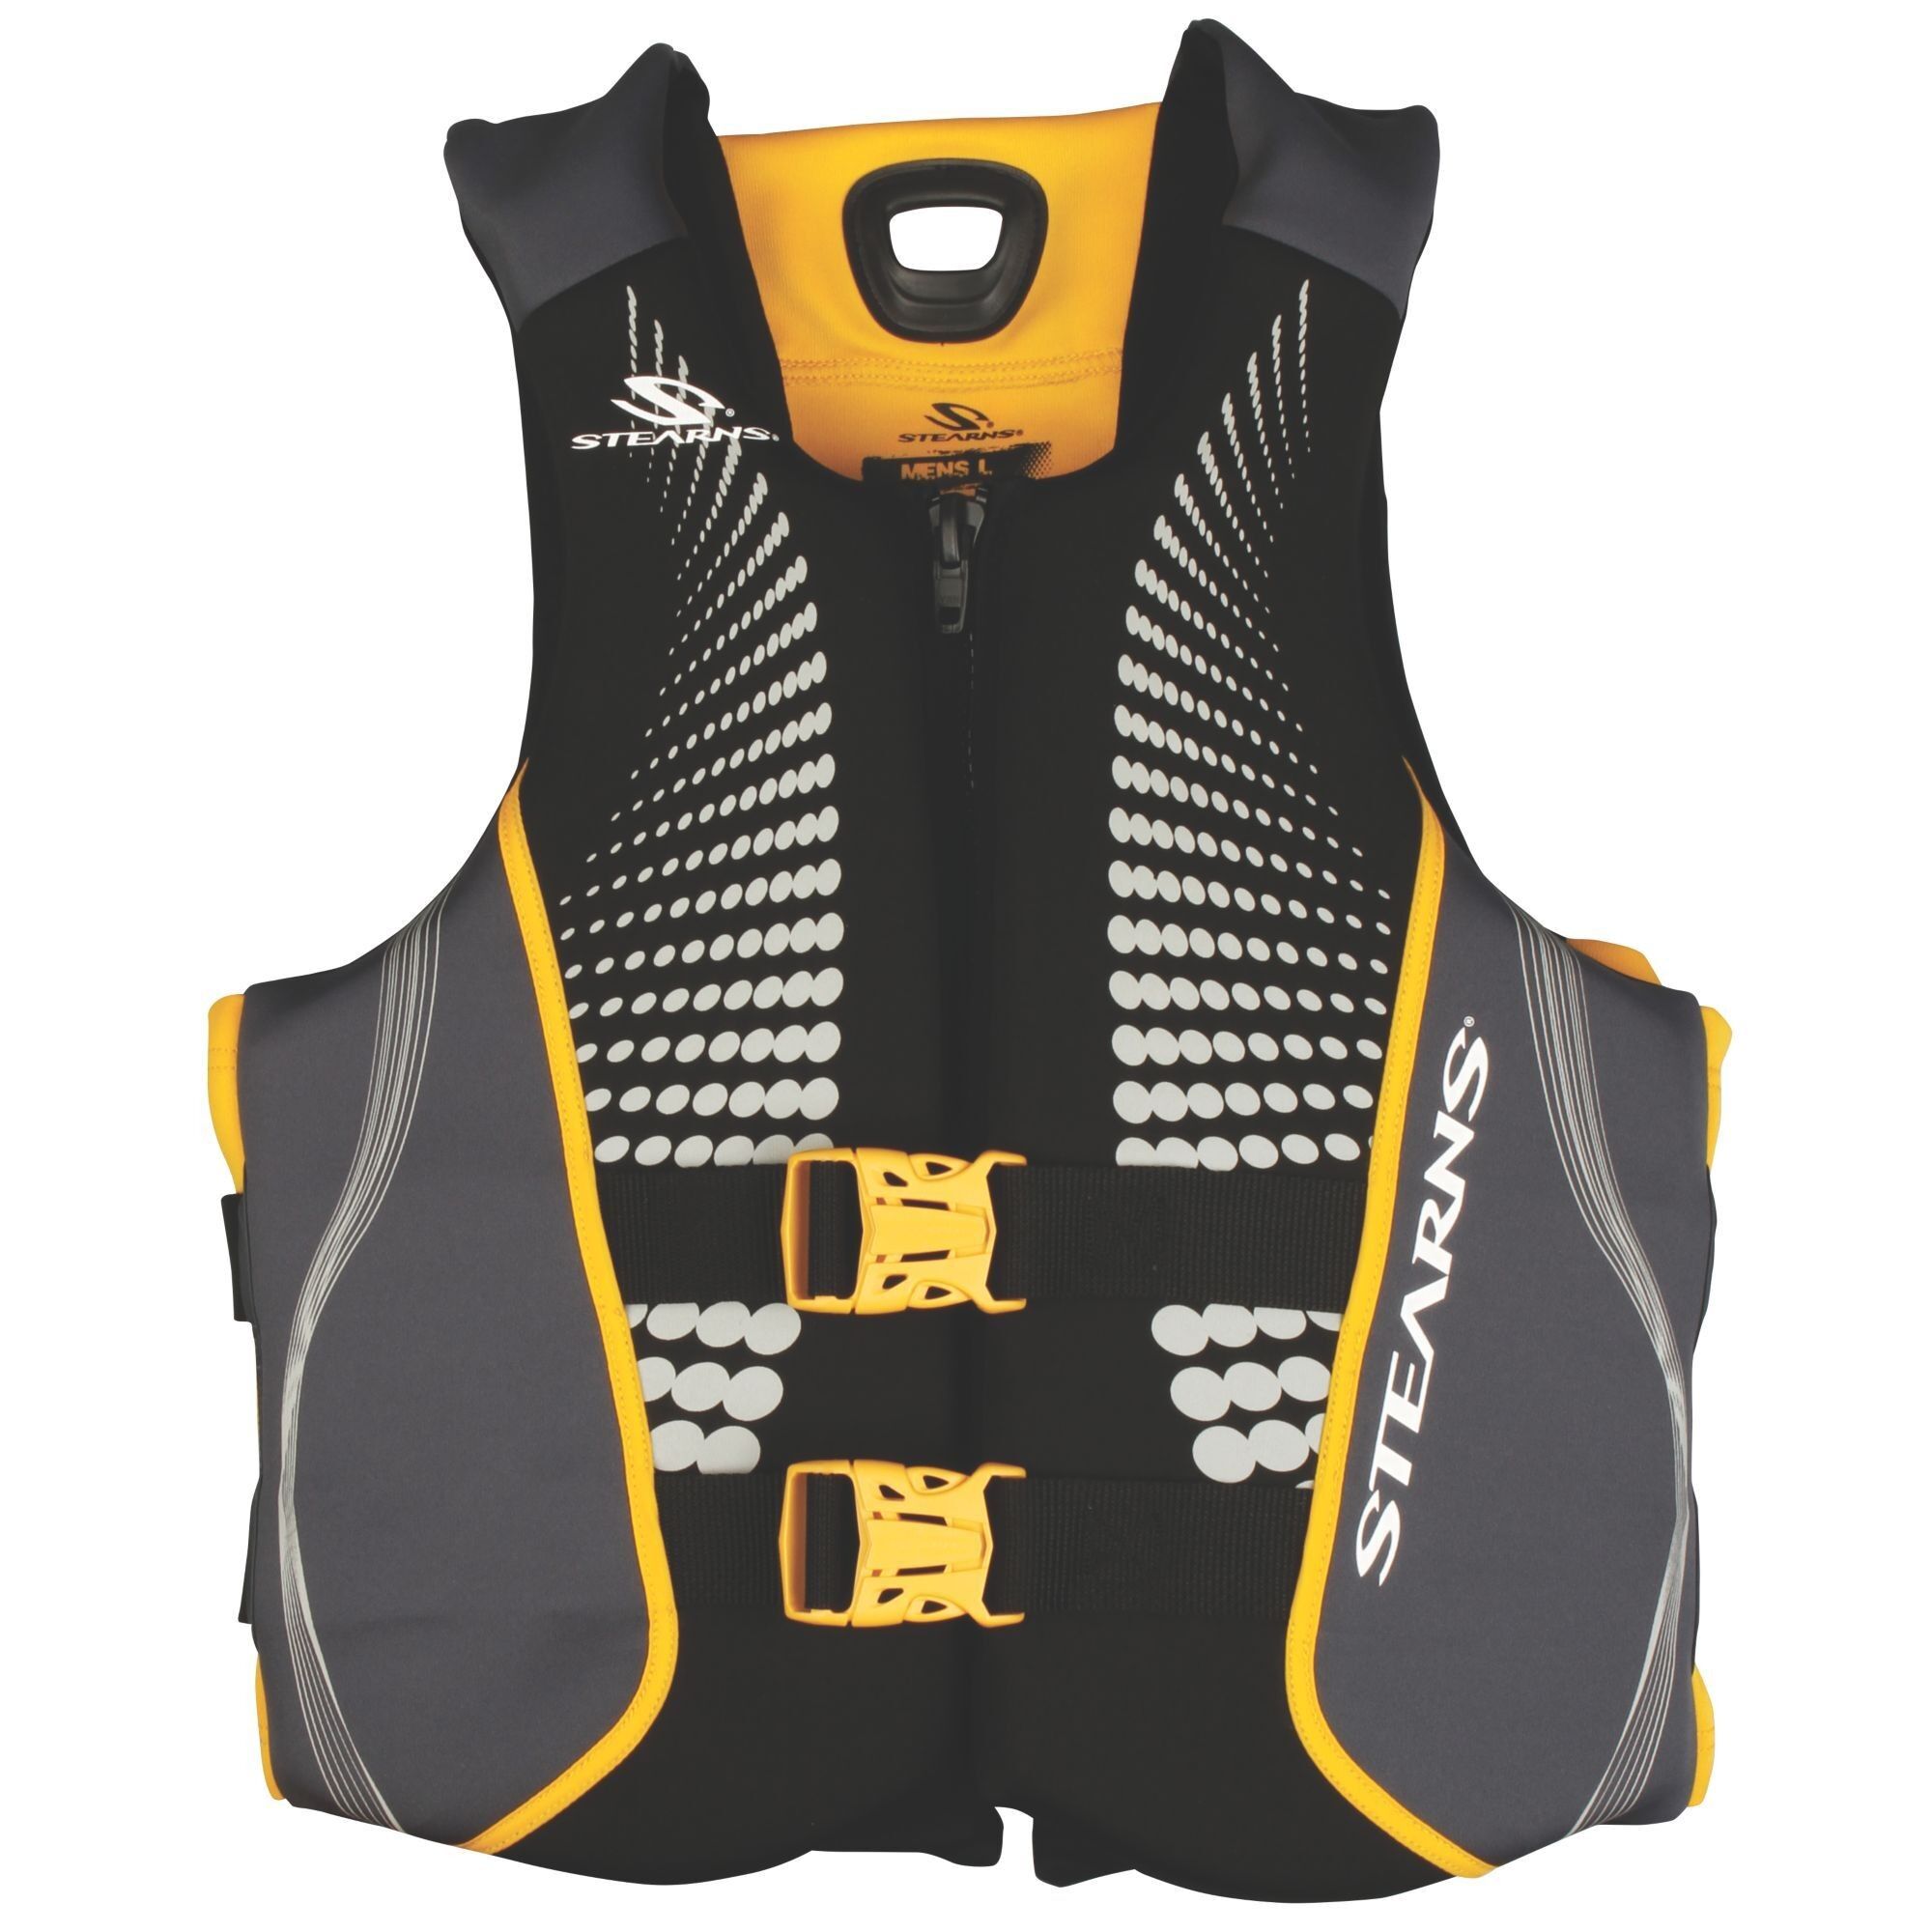 Men's V1 Series Hydroprene Life Jacket